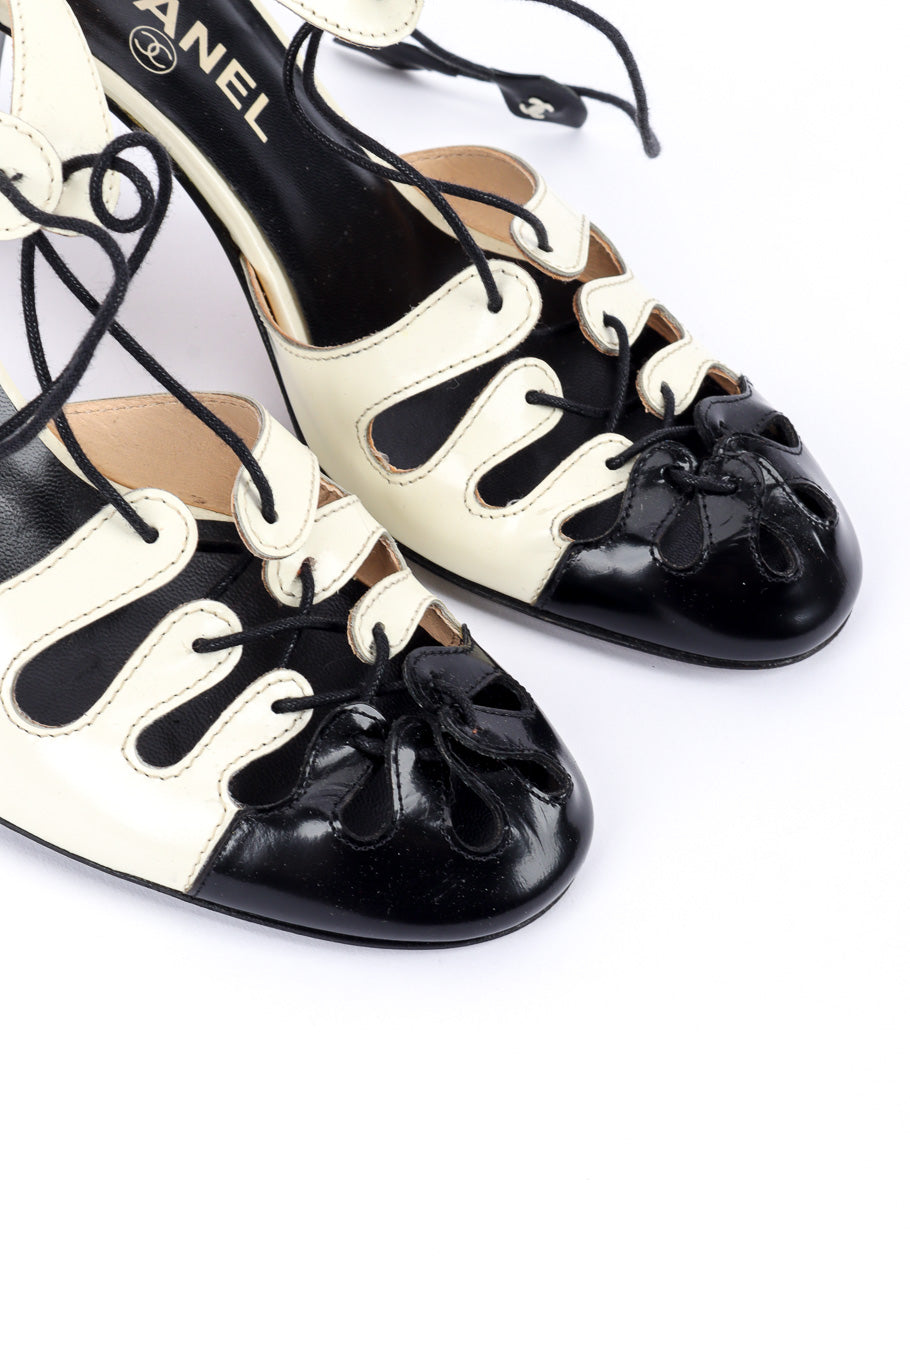 Vintage Chanel Lace Up Heels front toe closeup @recessla